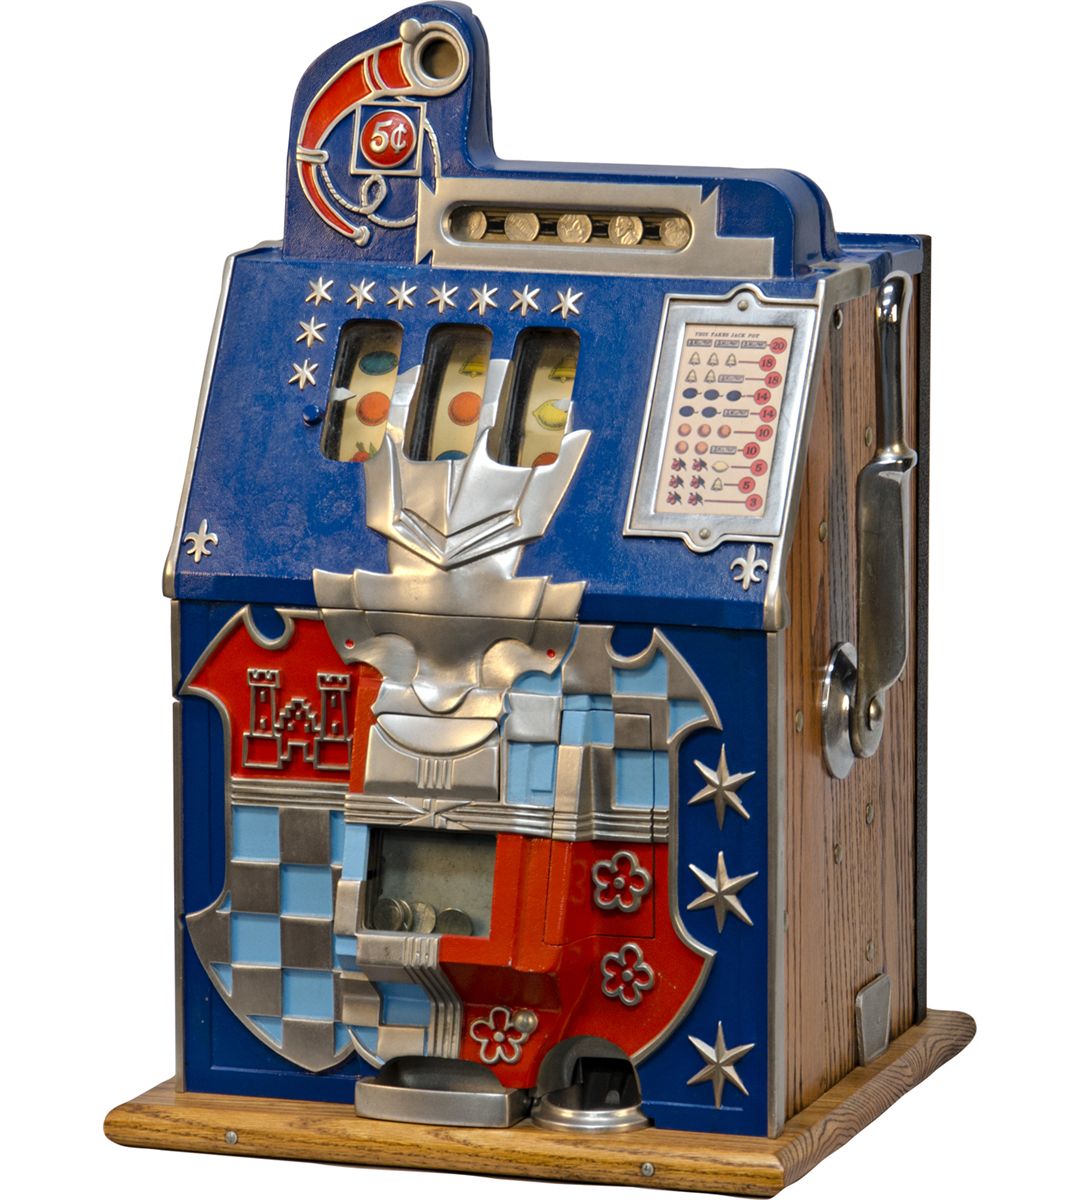 Mills novelty slot machine